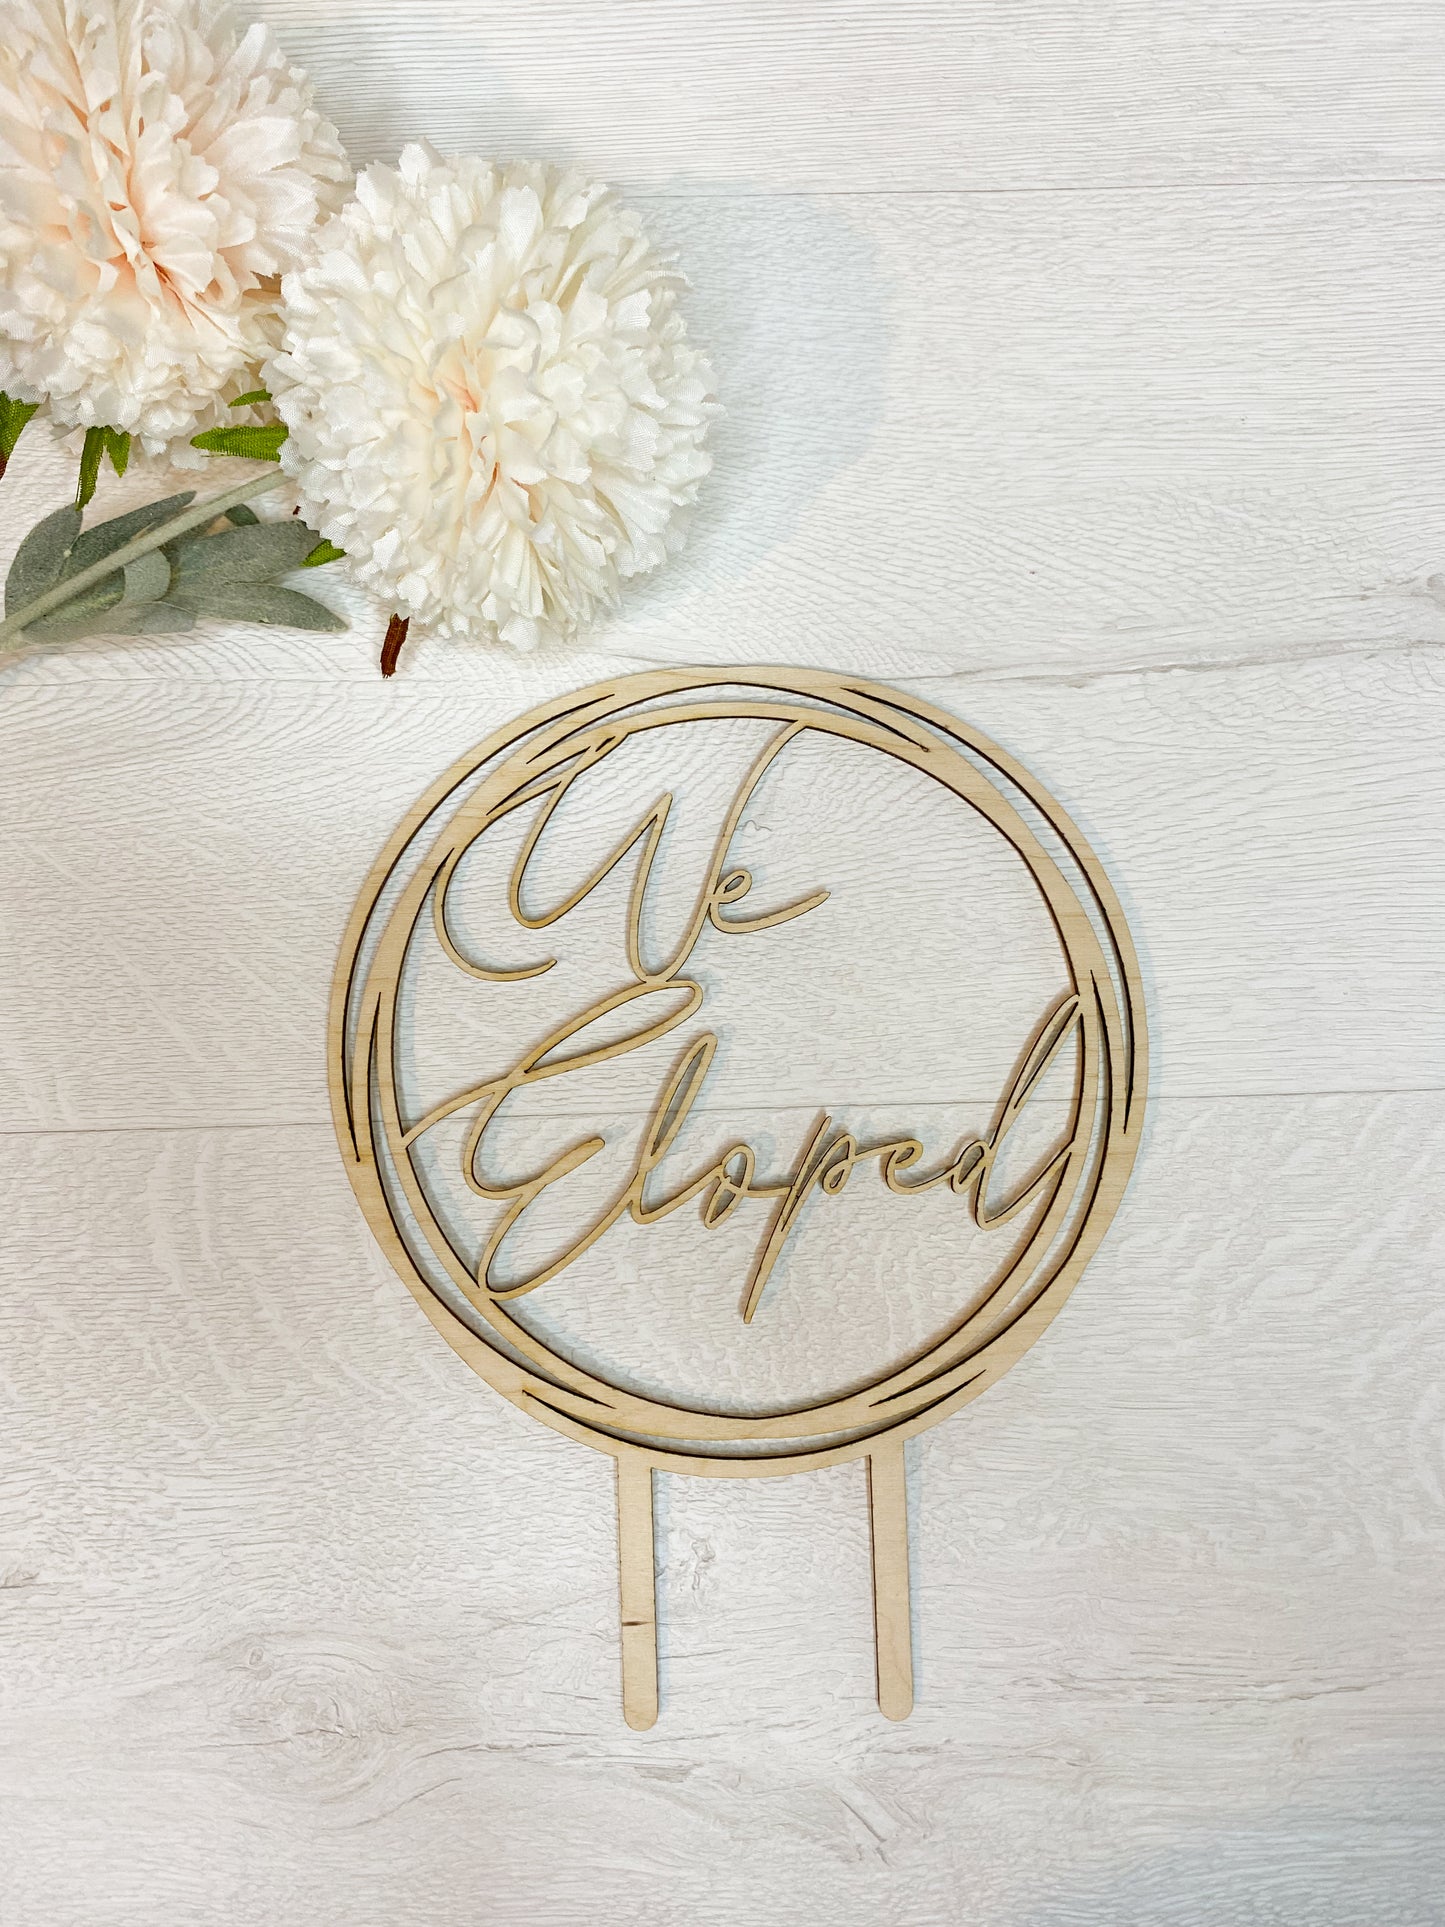 We Eloped | Wedding Cake Topper | Mr and Mrs Topper | Elope Wedding | Party decor | Cake topper | Wedding Cake | Wooden Topper